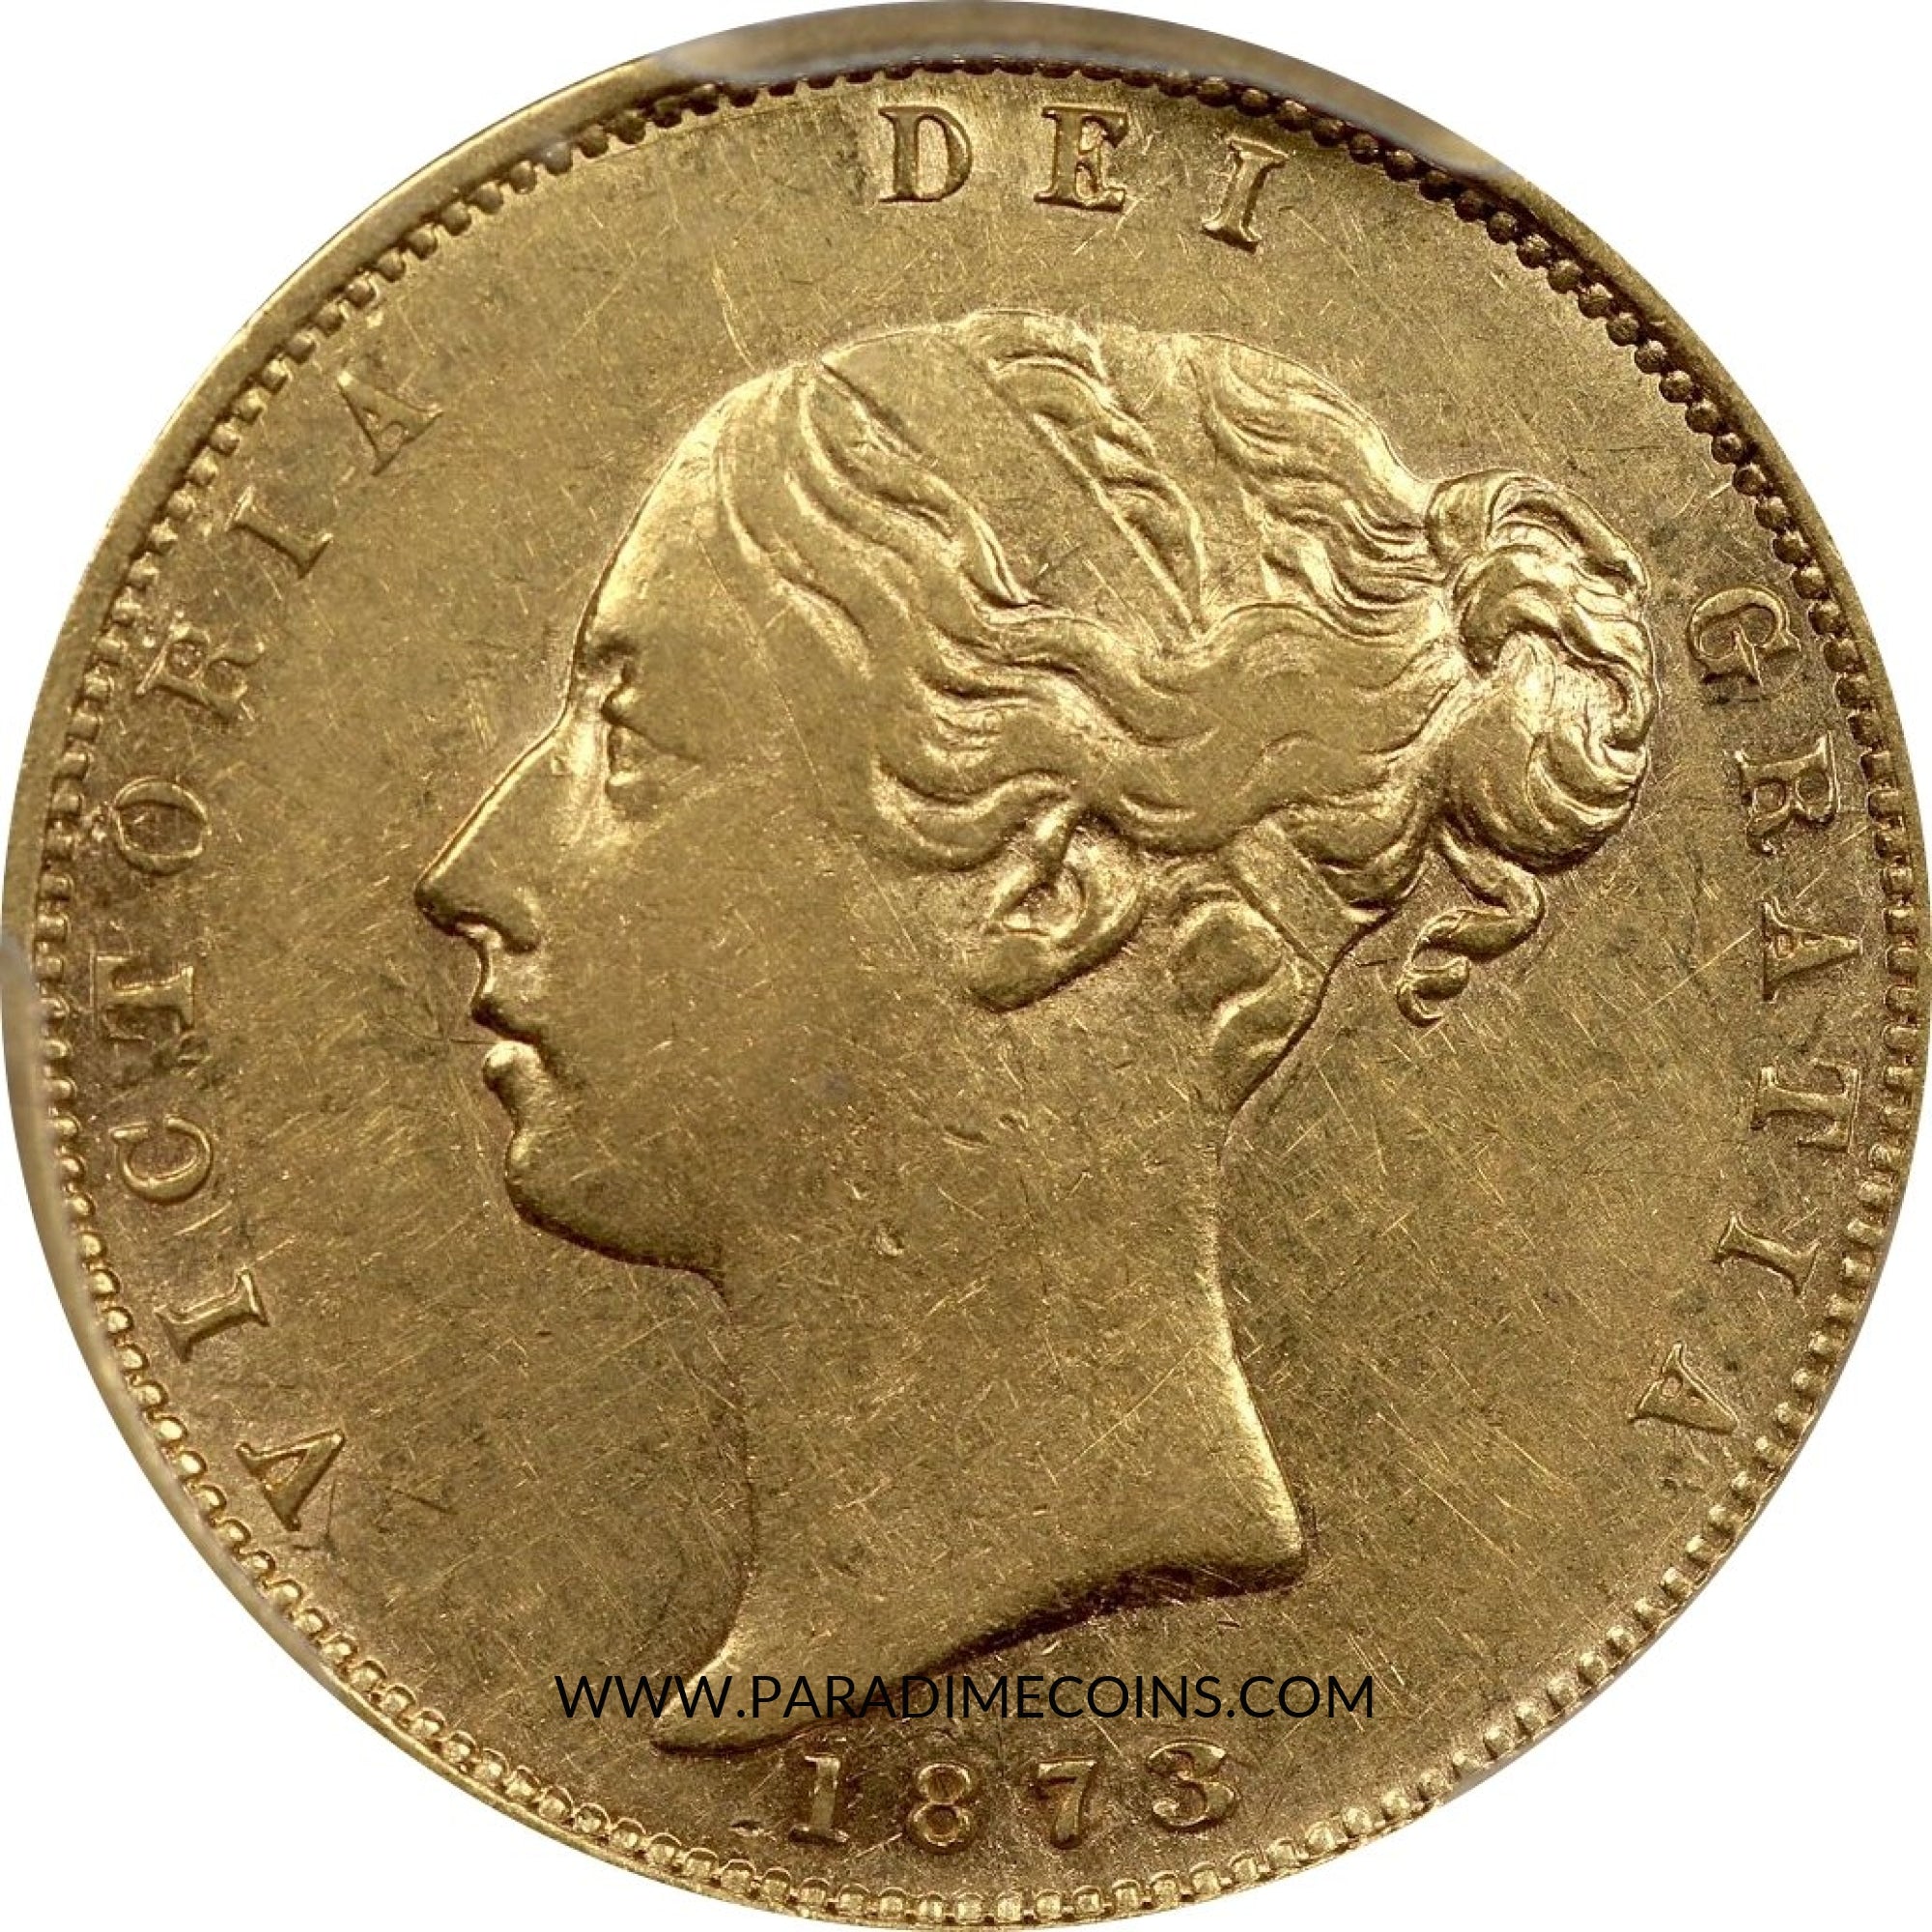 1837-M 1/2 SOV AU50 AUSTRALIA PCGS - Paradime Coins | PCGS NGC CACG CAC Rare US Numismatic Coins For Sale